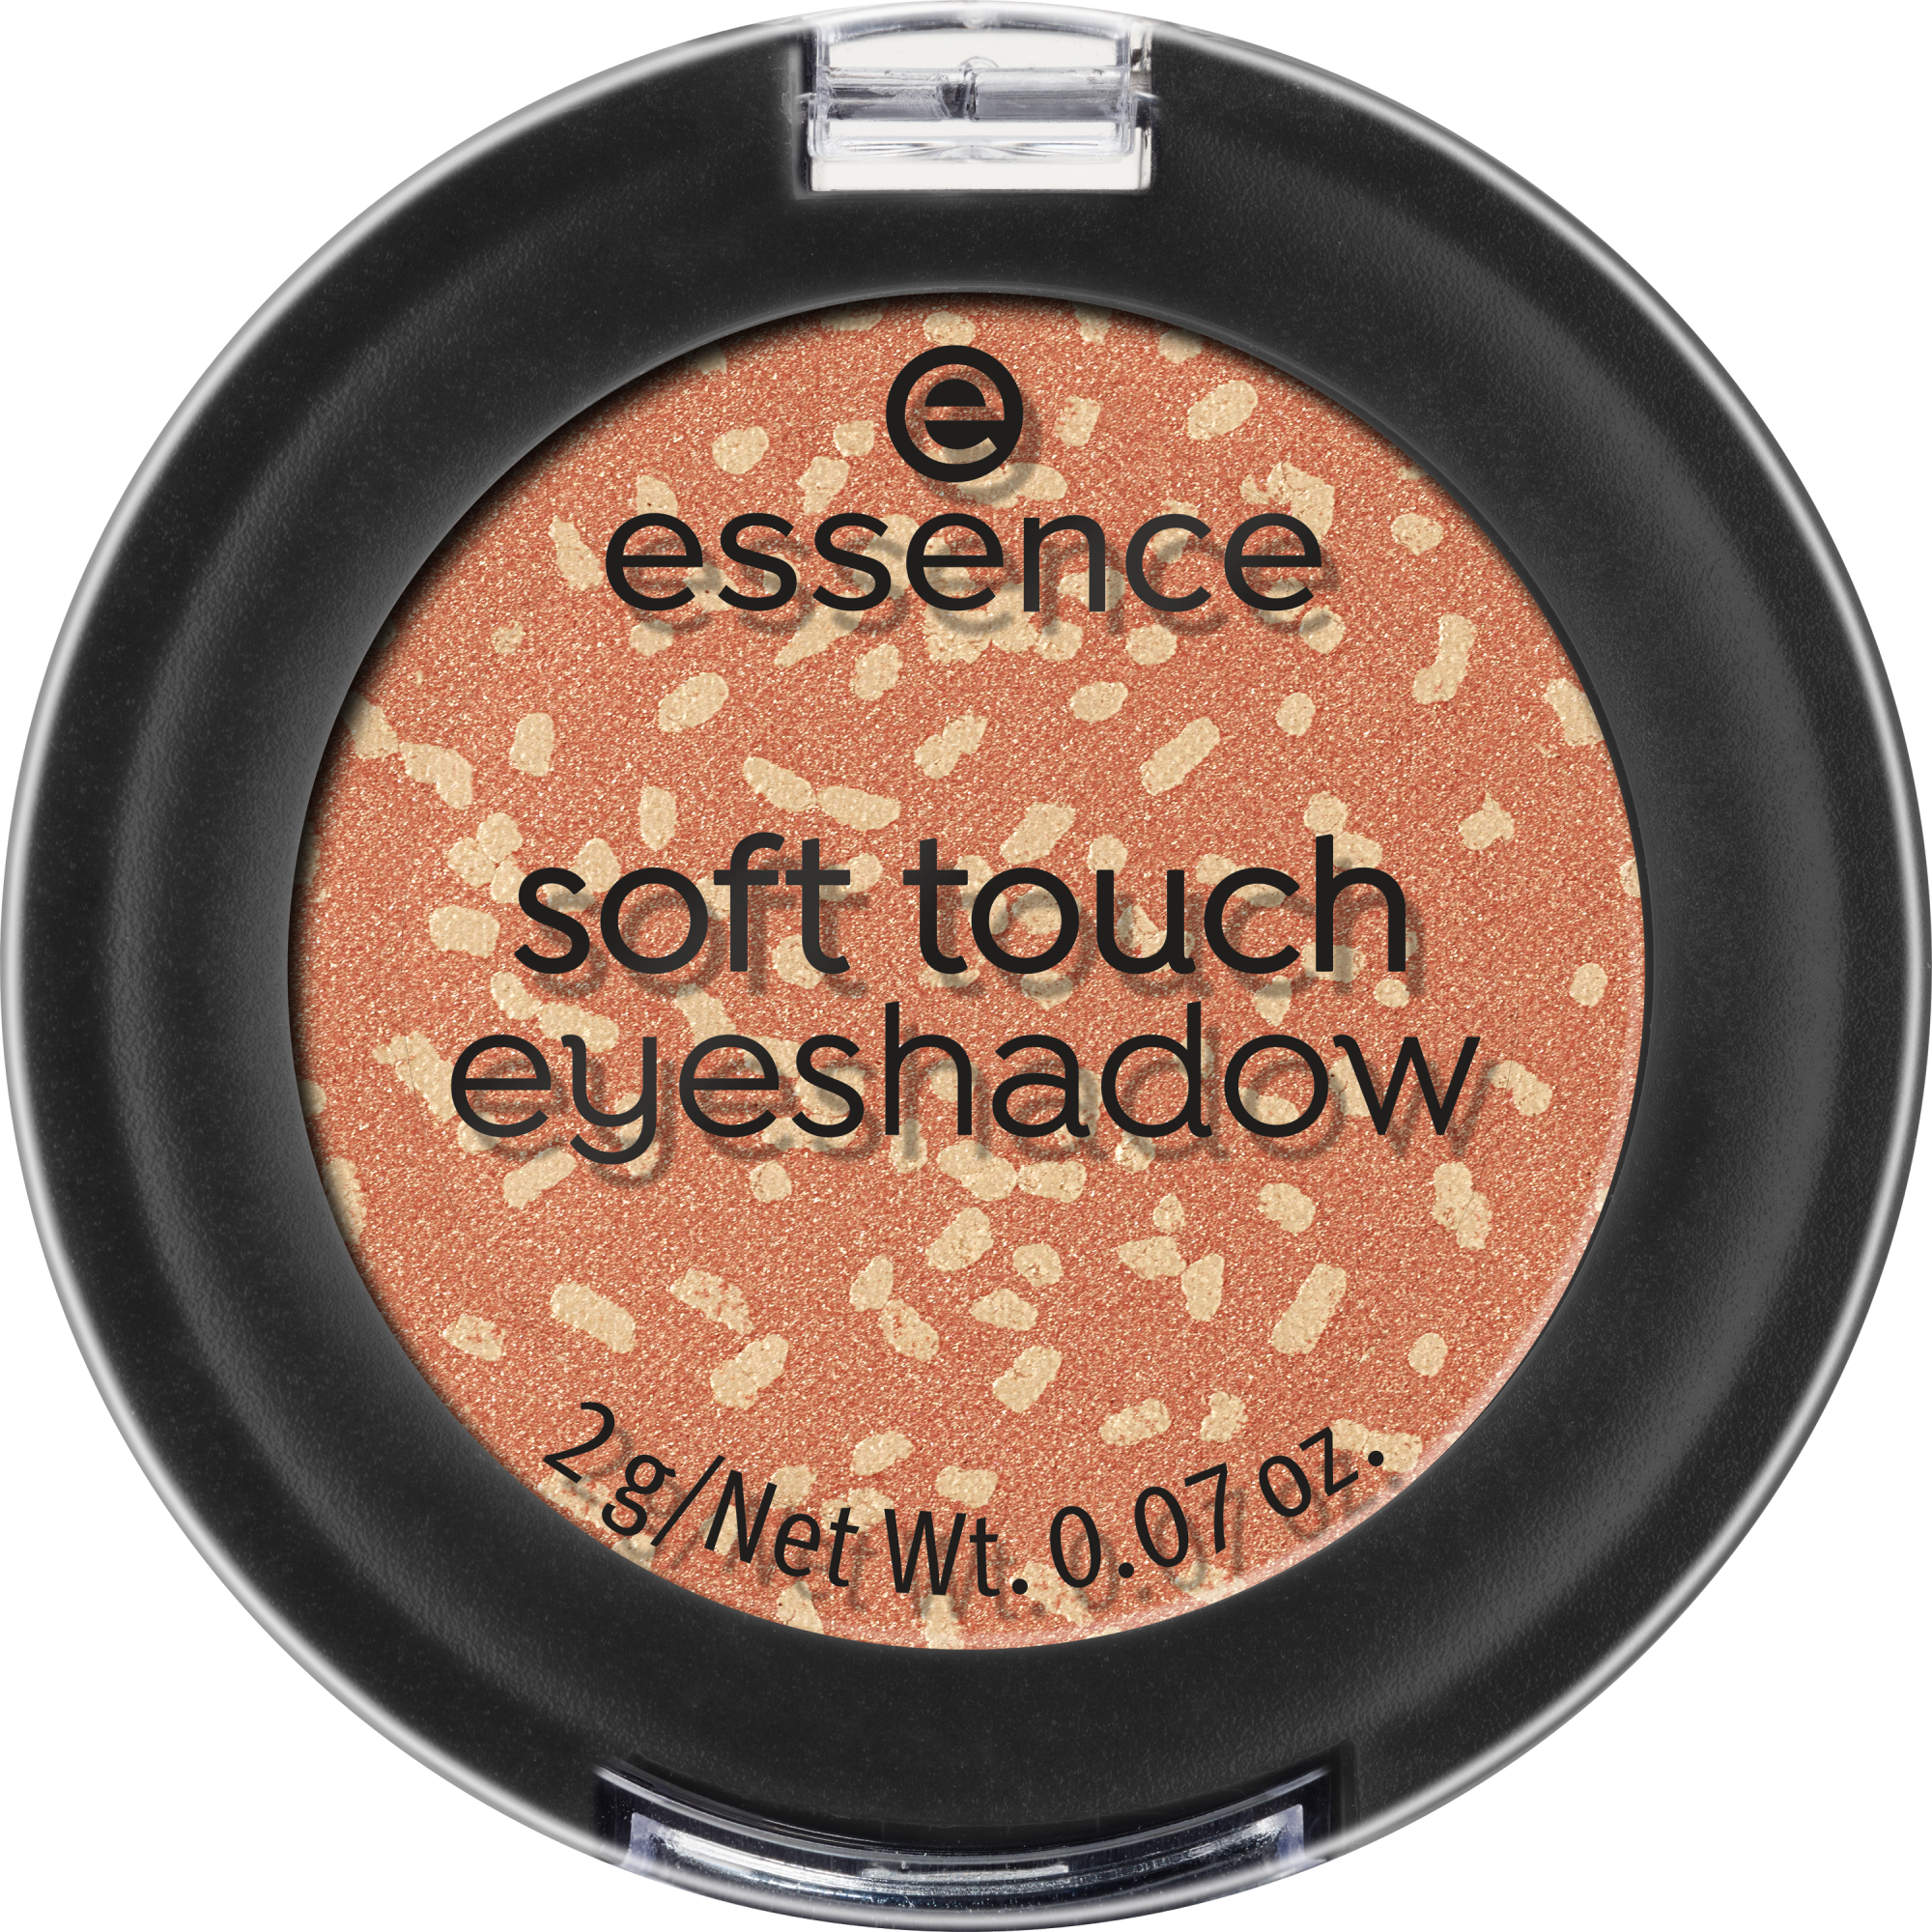 soft touch eyeshadow fard à paupières ultra-doux